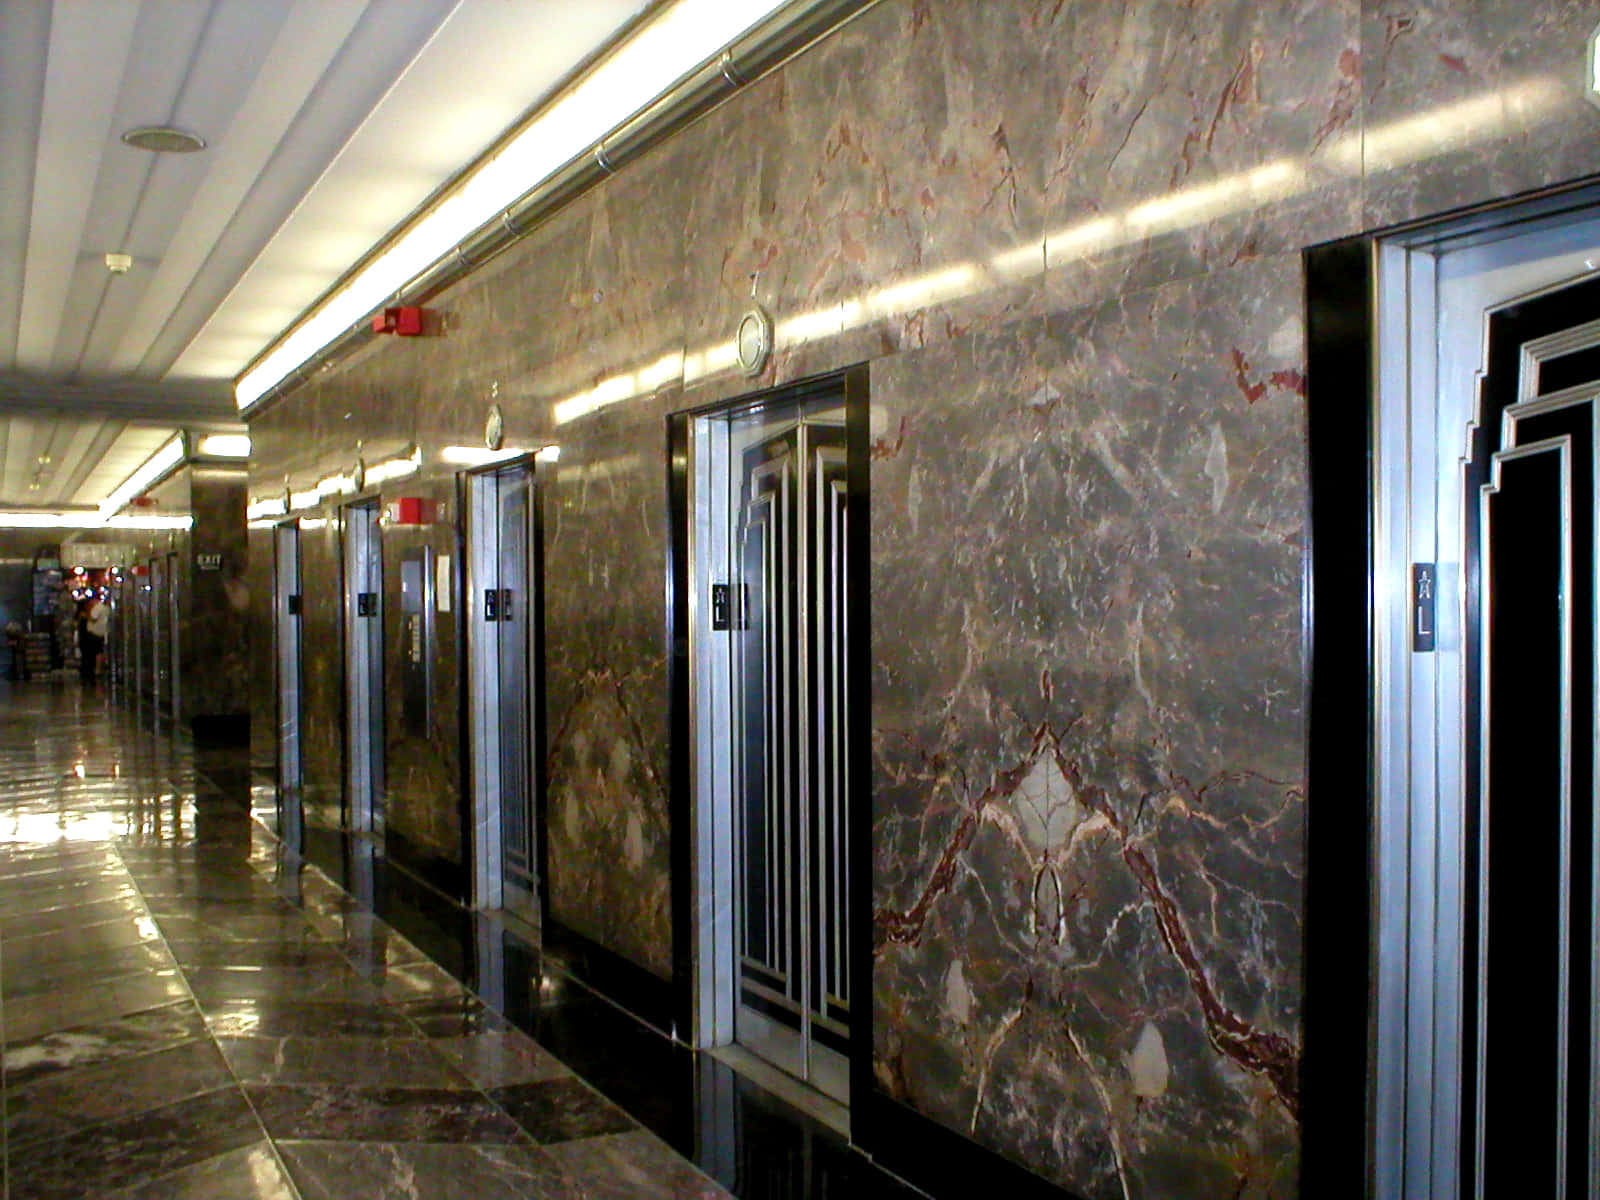 A Long Hallway With Many Elevators